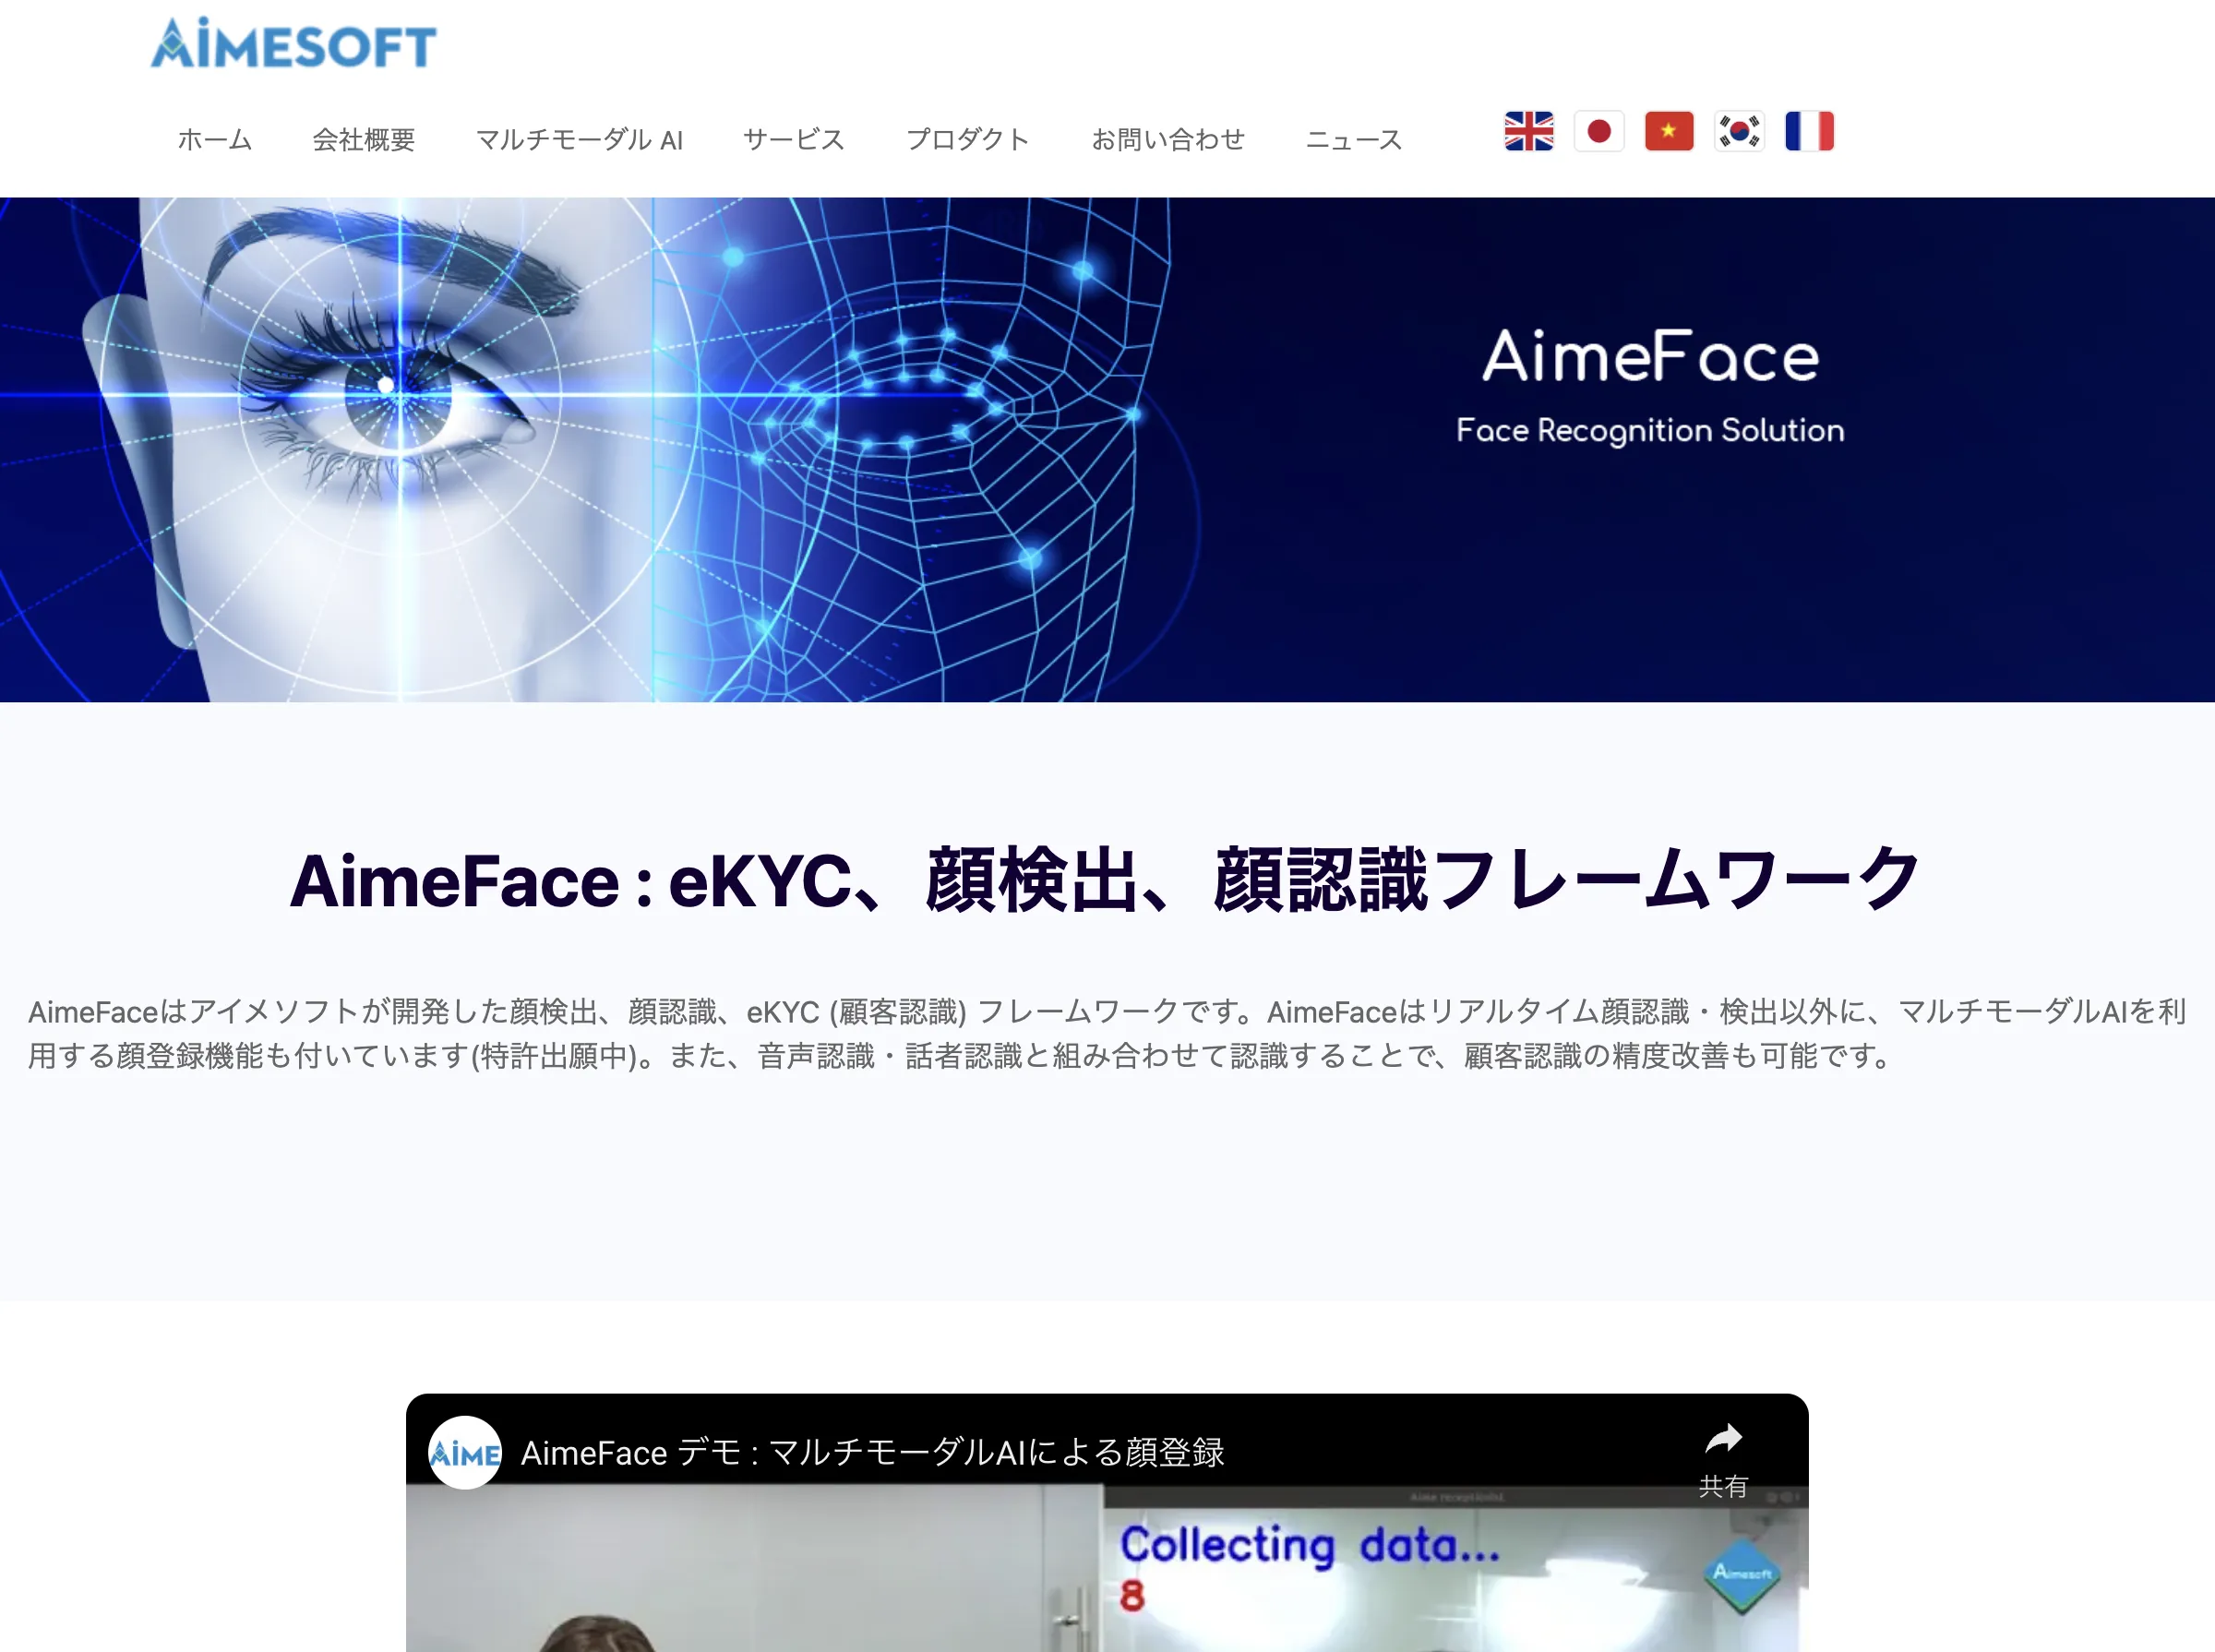 AimeFace(株式会社アイメソフト・ジャパン)